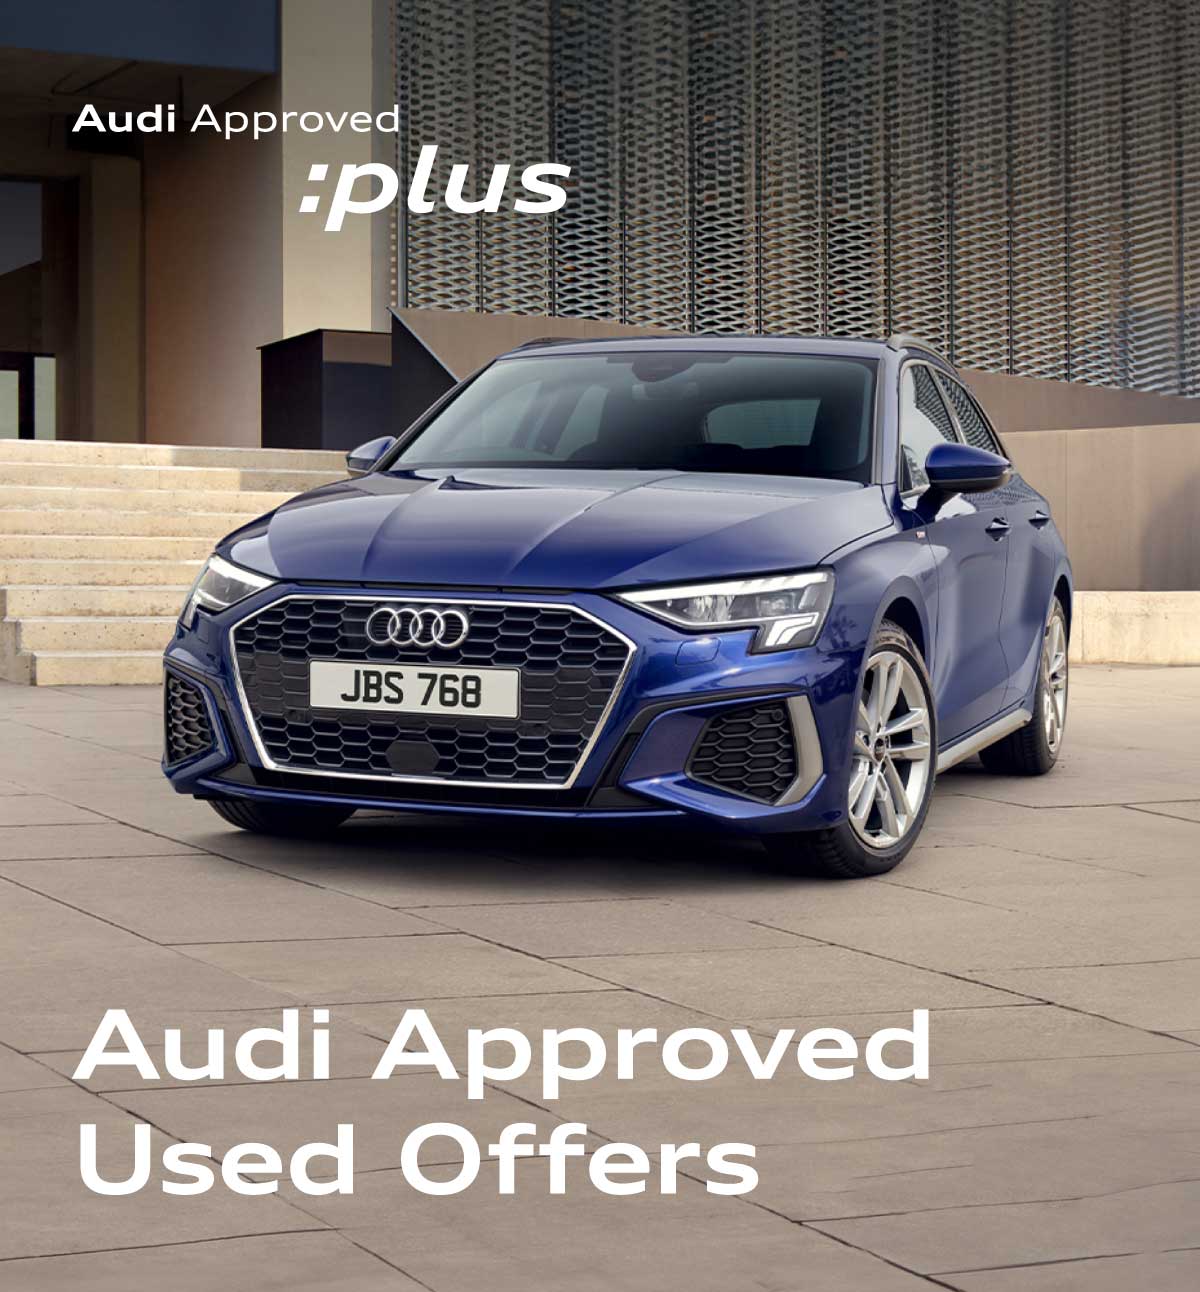 Audi Approved petrol